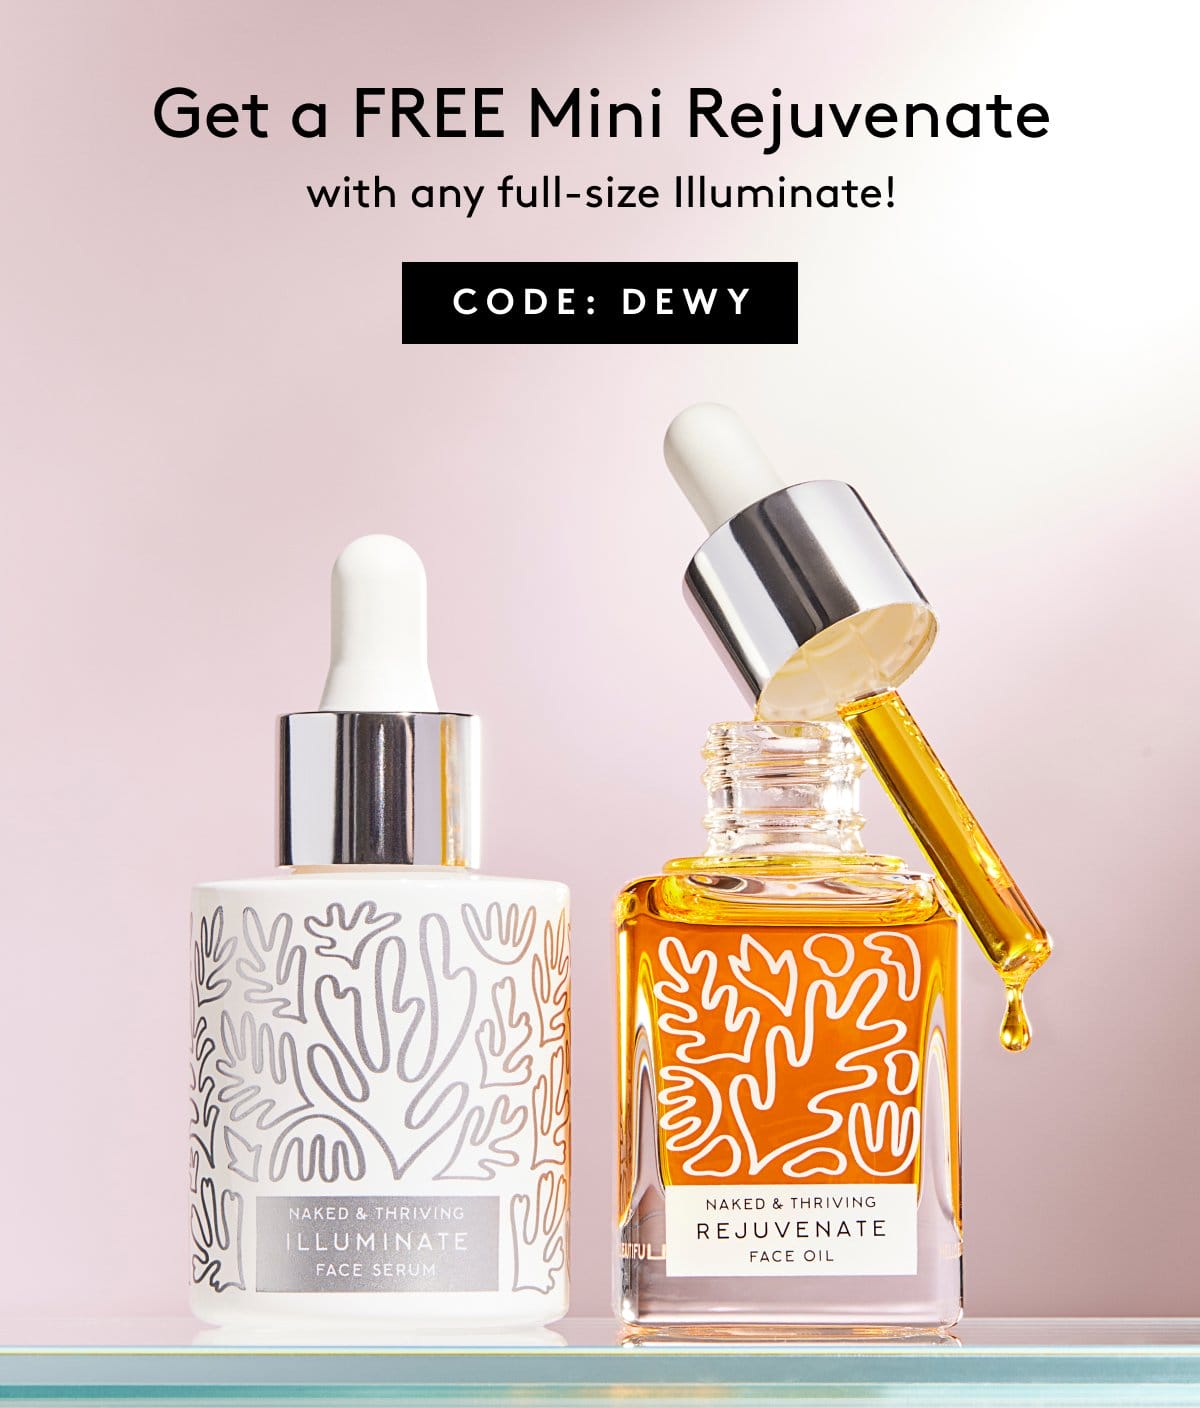 Get a FREE Mini Rejuvenate!